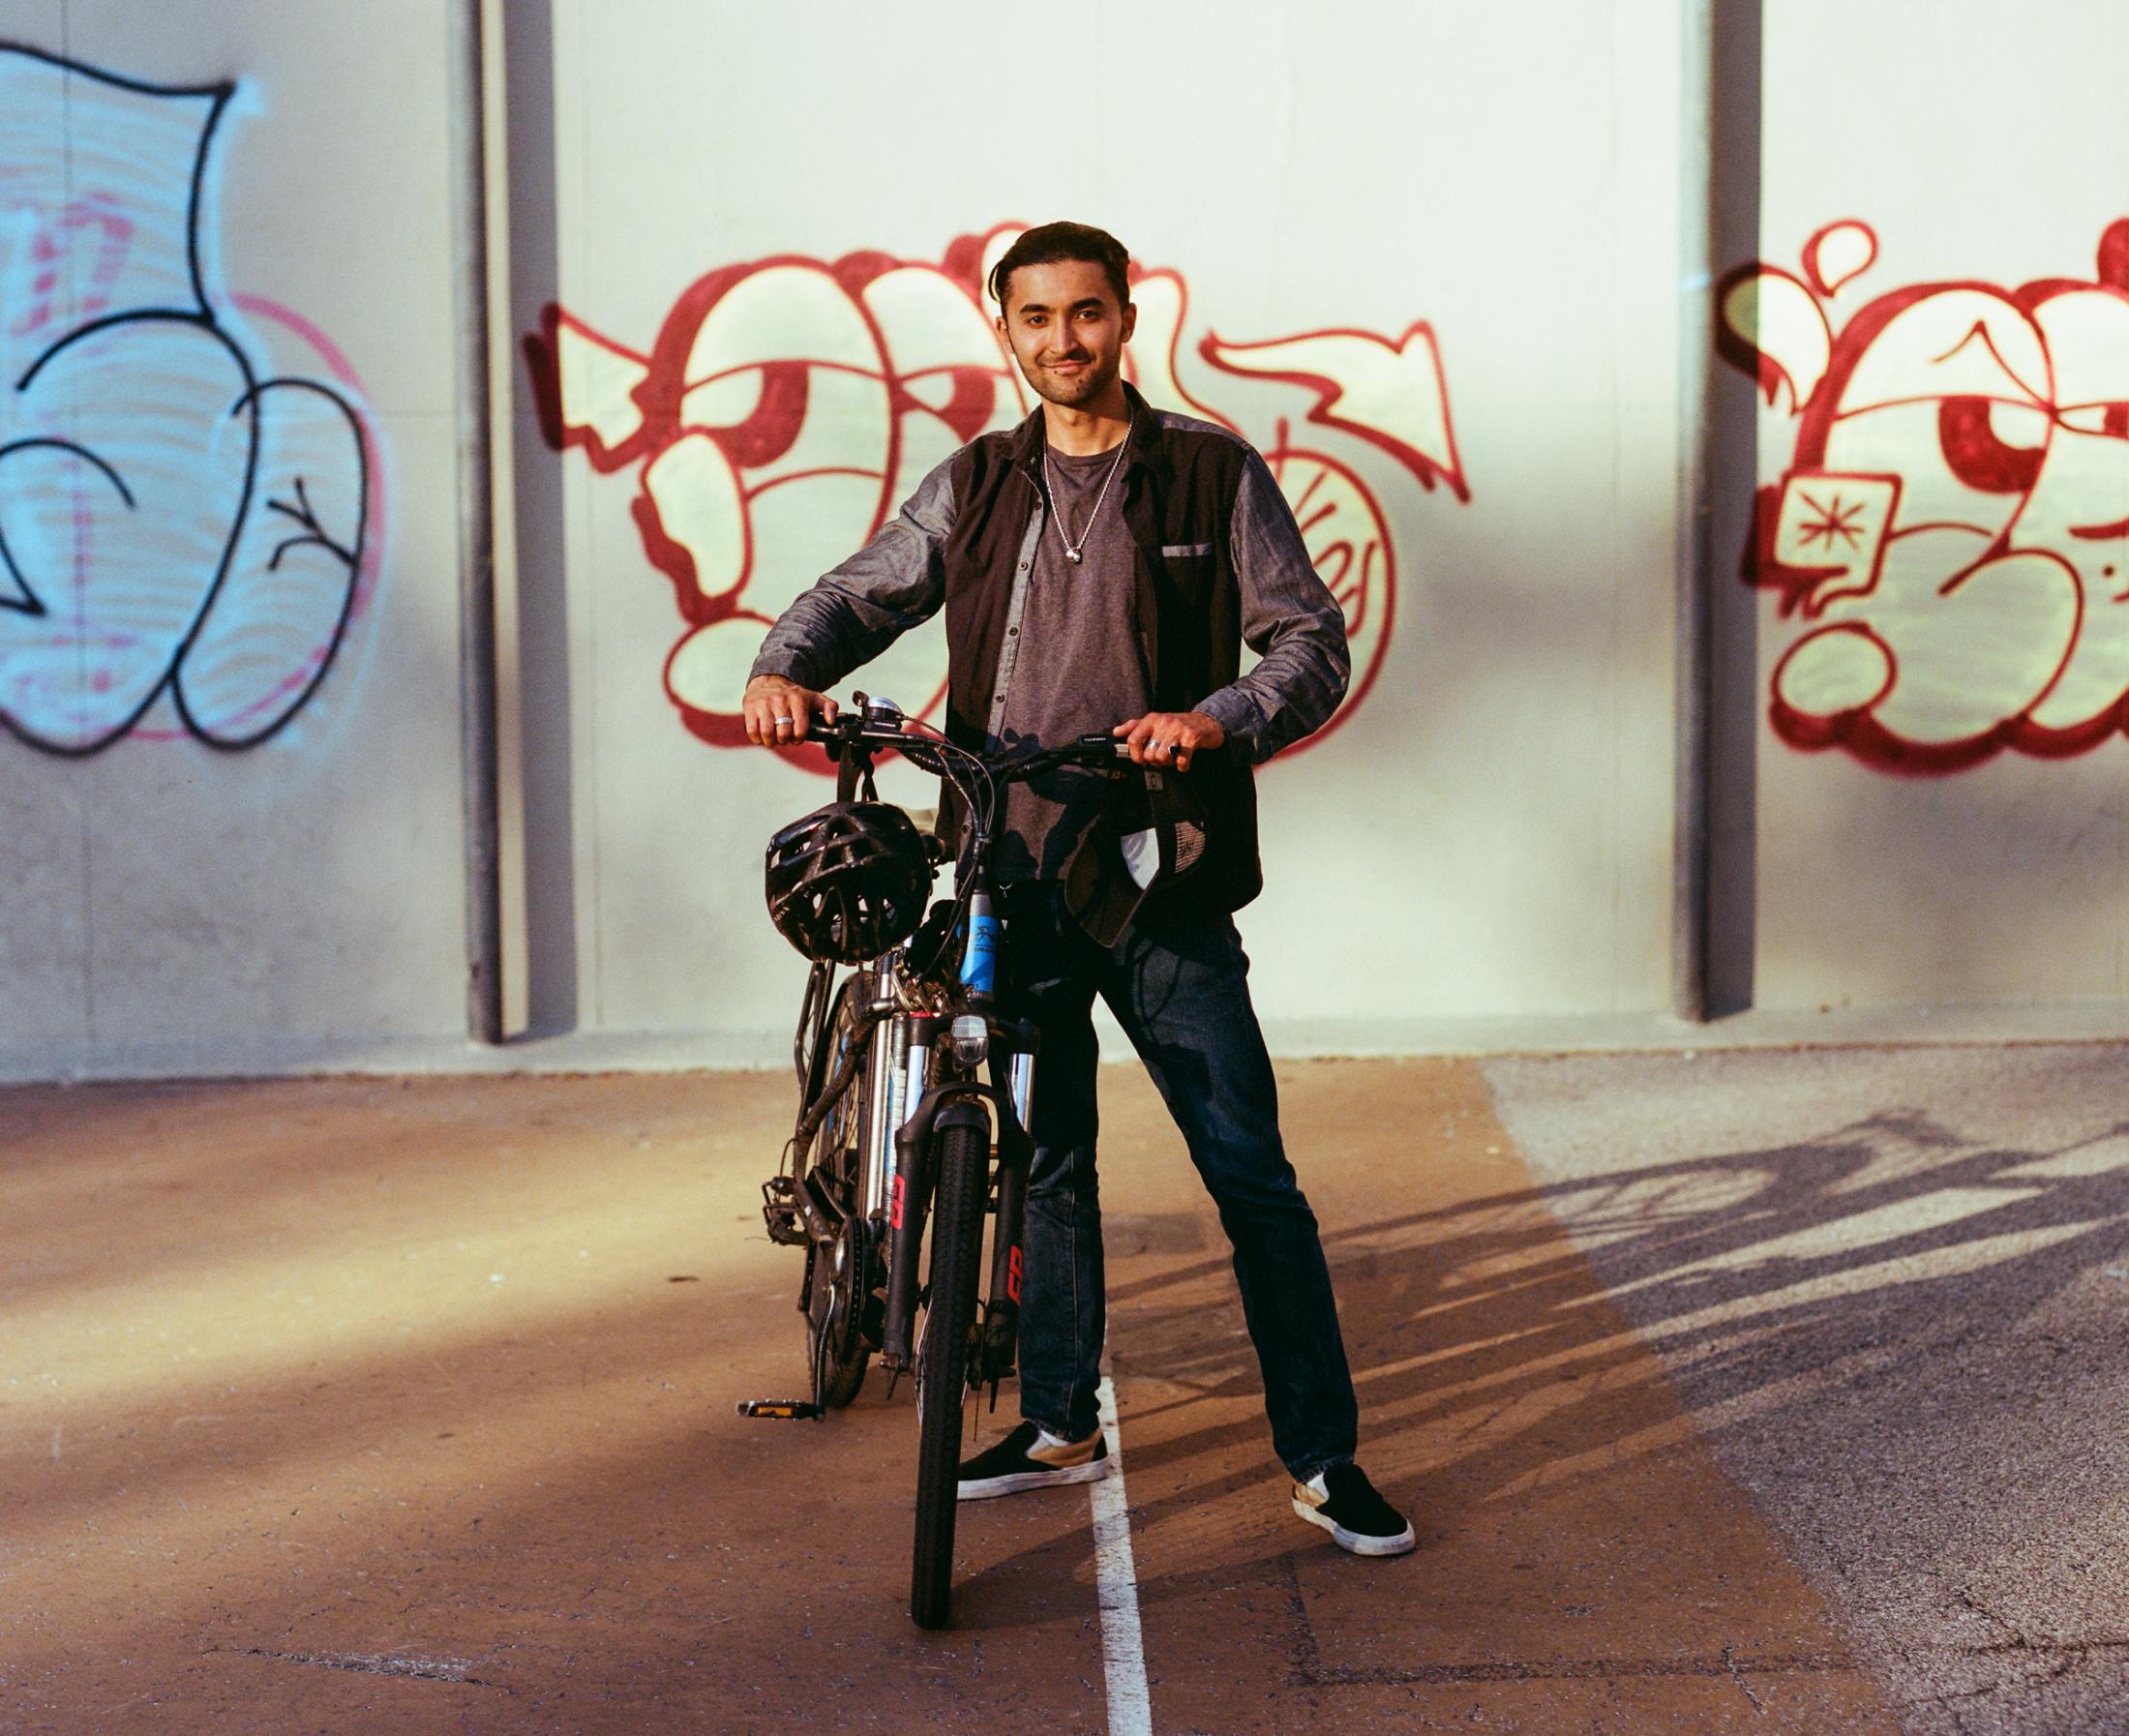 Bahadir Rozi on September 27, 2019 in NYC. Photo essay on Bike Messengers.